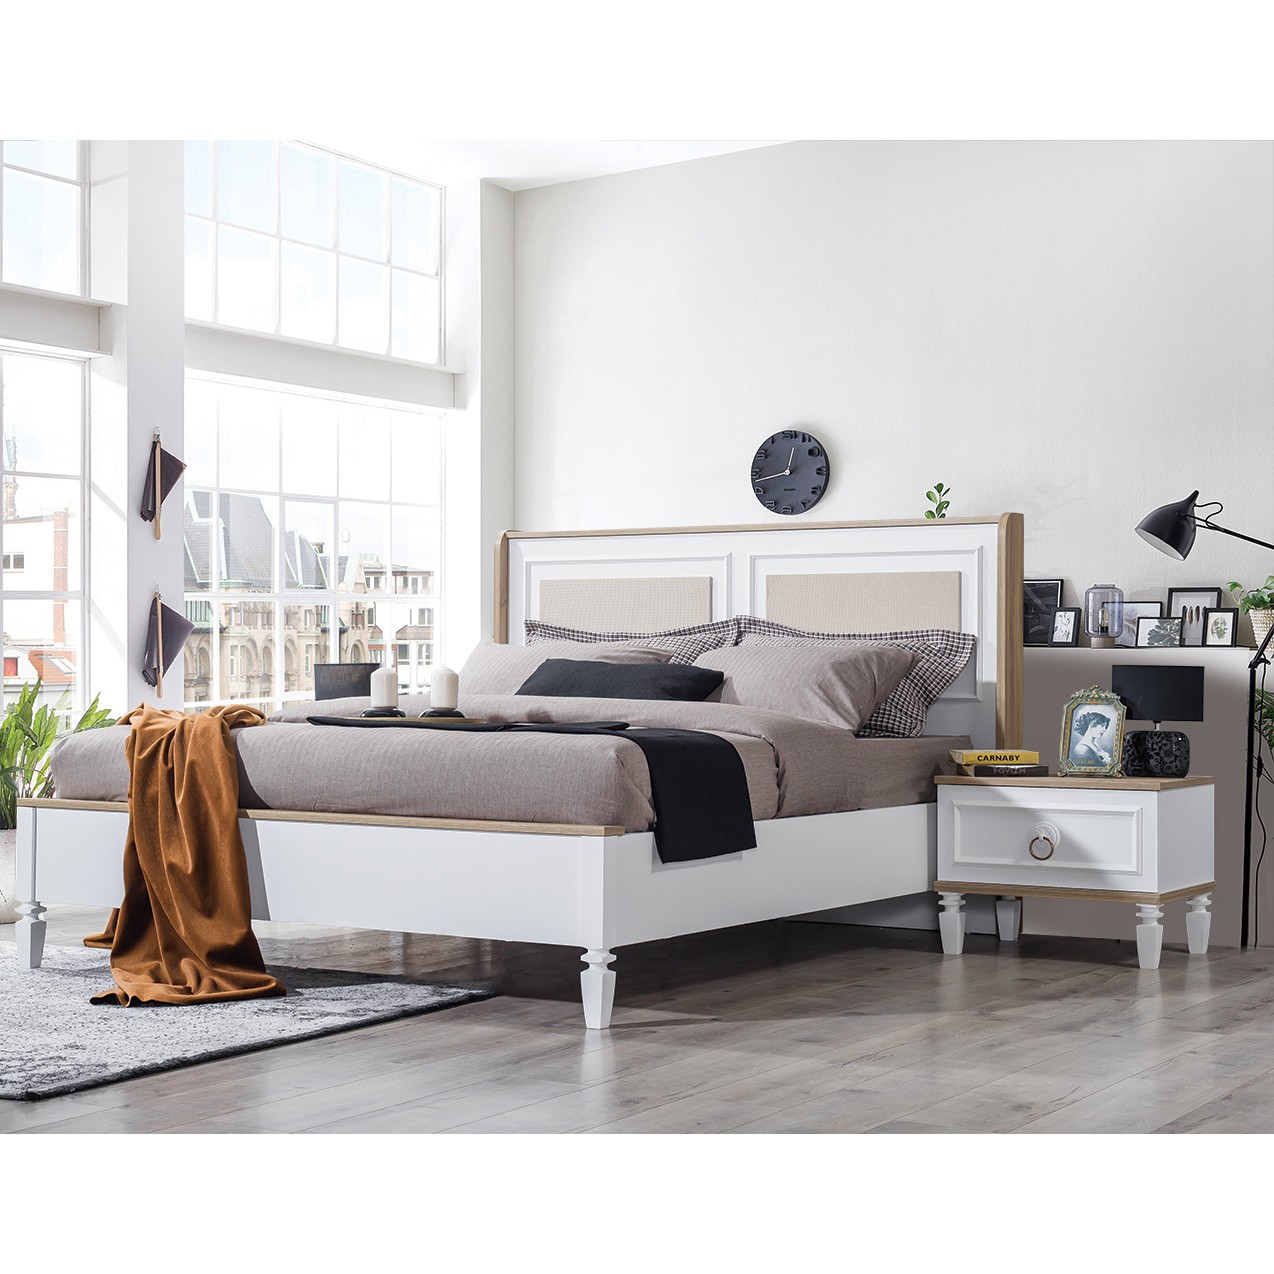 Mila Vol5 Bedroom (Bed With Storage 160x200cm)